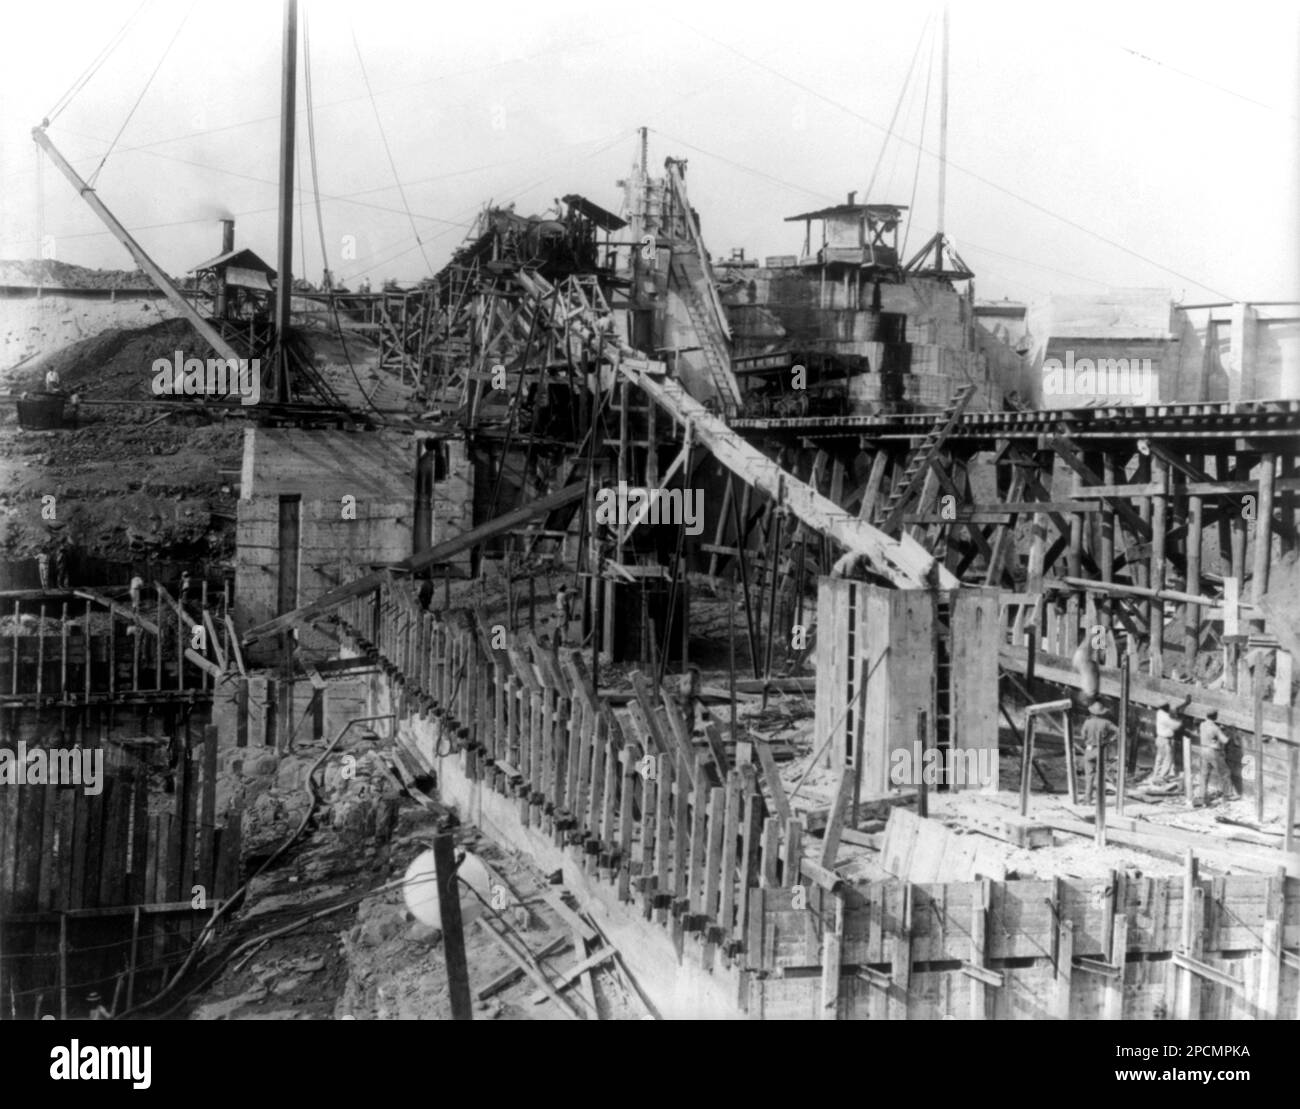 PANAMA : Panama Canal construction, 1913 , photo by H.N. Rudd - GEOGRAPHY - GEOGRAFIA - FOTO STORICHE - HISTORY - HISTORICAL  - CANALE DI PANAMA - CENTRO AMERICA  ---  Archivio GBB Stock Photo